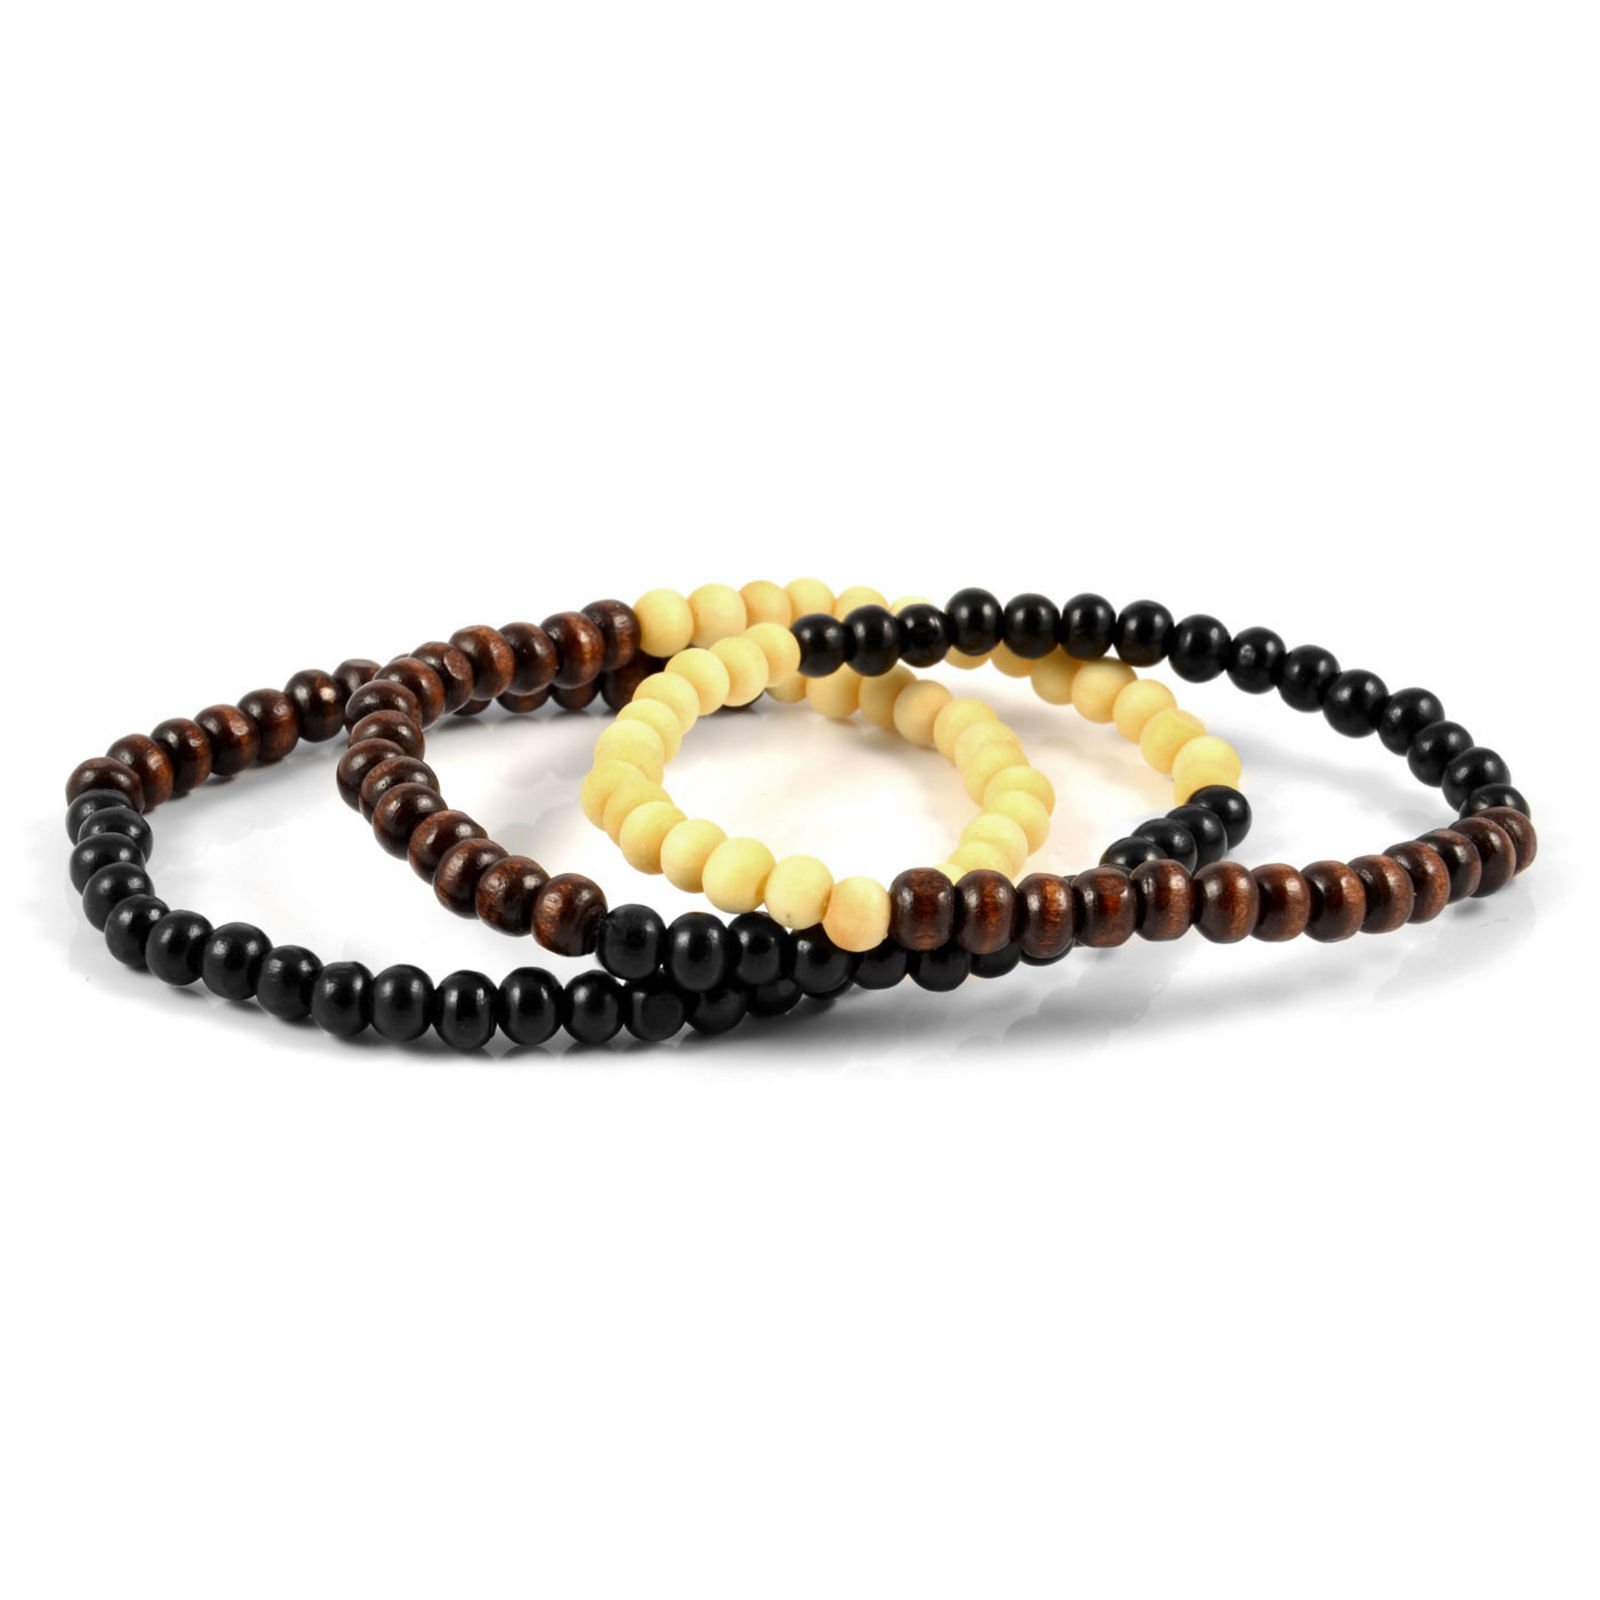 Buy Natural Black Sandalwood Round Wood Beads 108 Beads Mala Prayer Beads  6mm, 8mm Online in India - Etsy